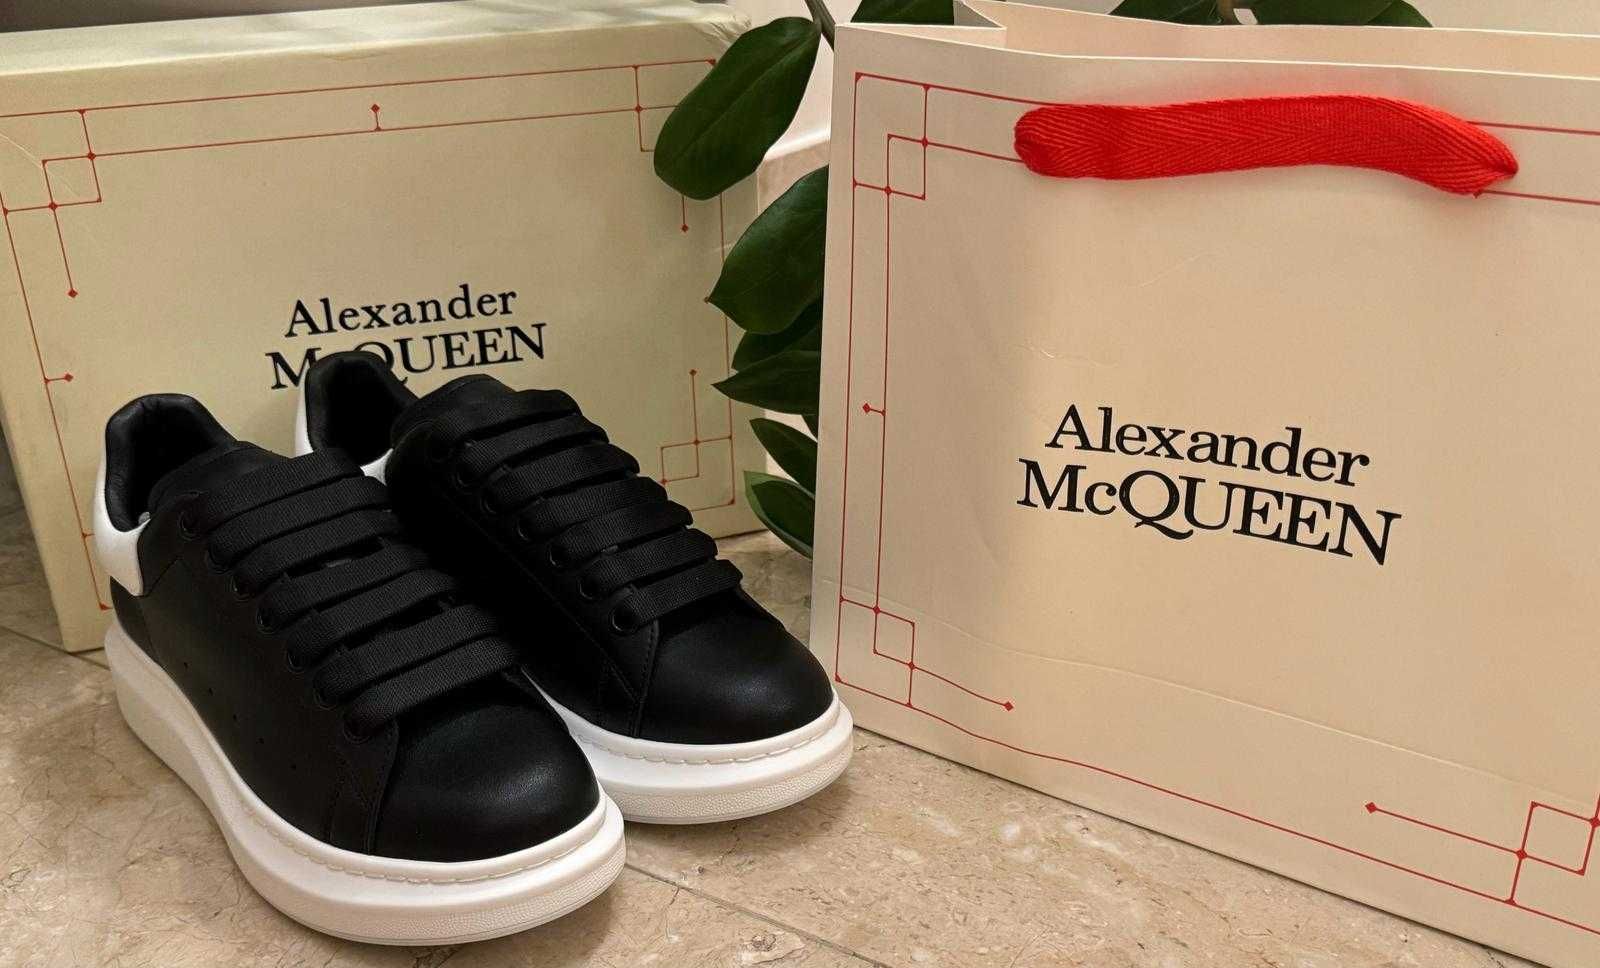 Alexander McQueen Black - Marimi 35-45 in stoc acum